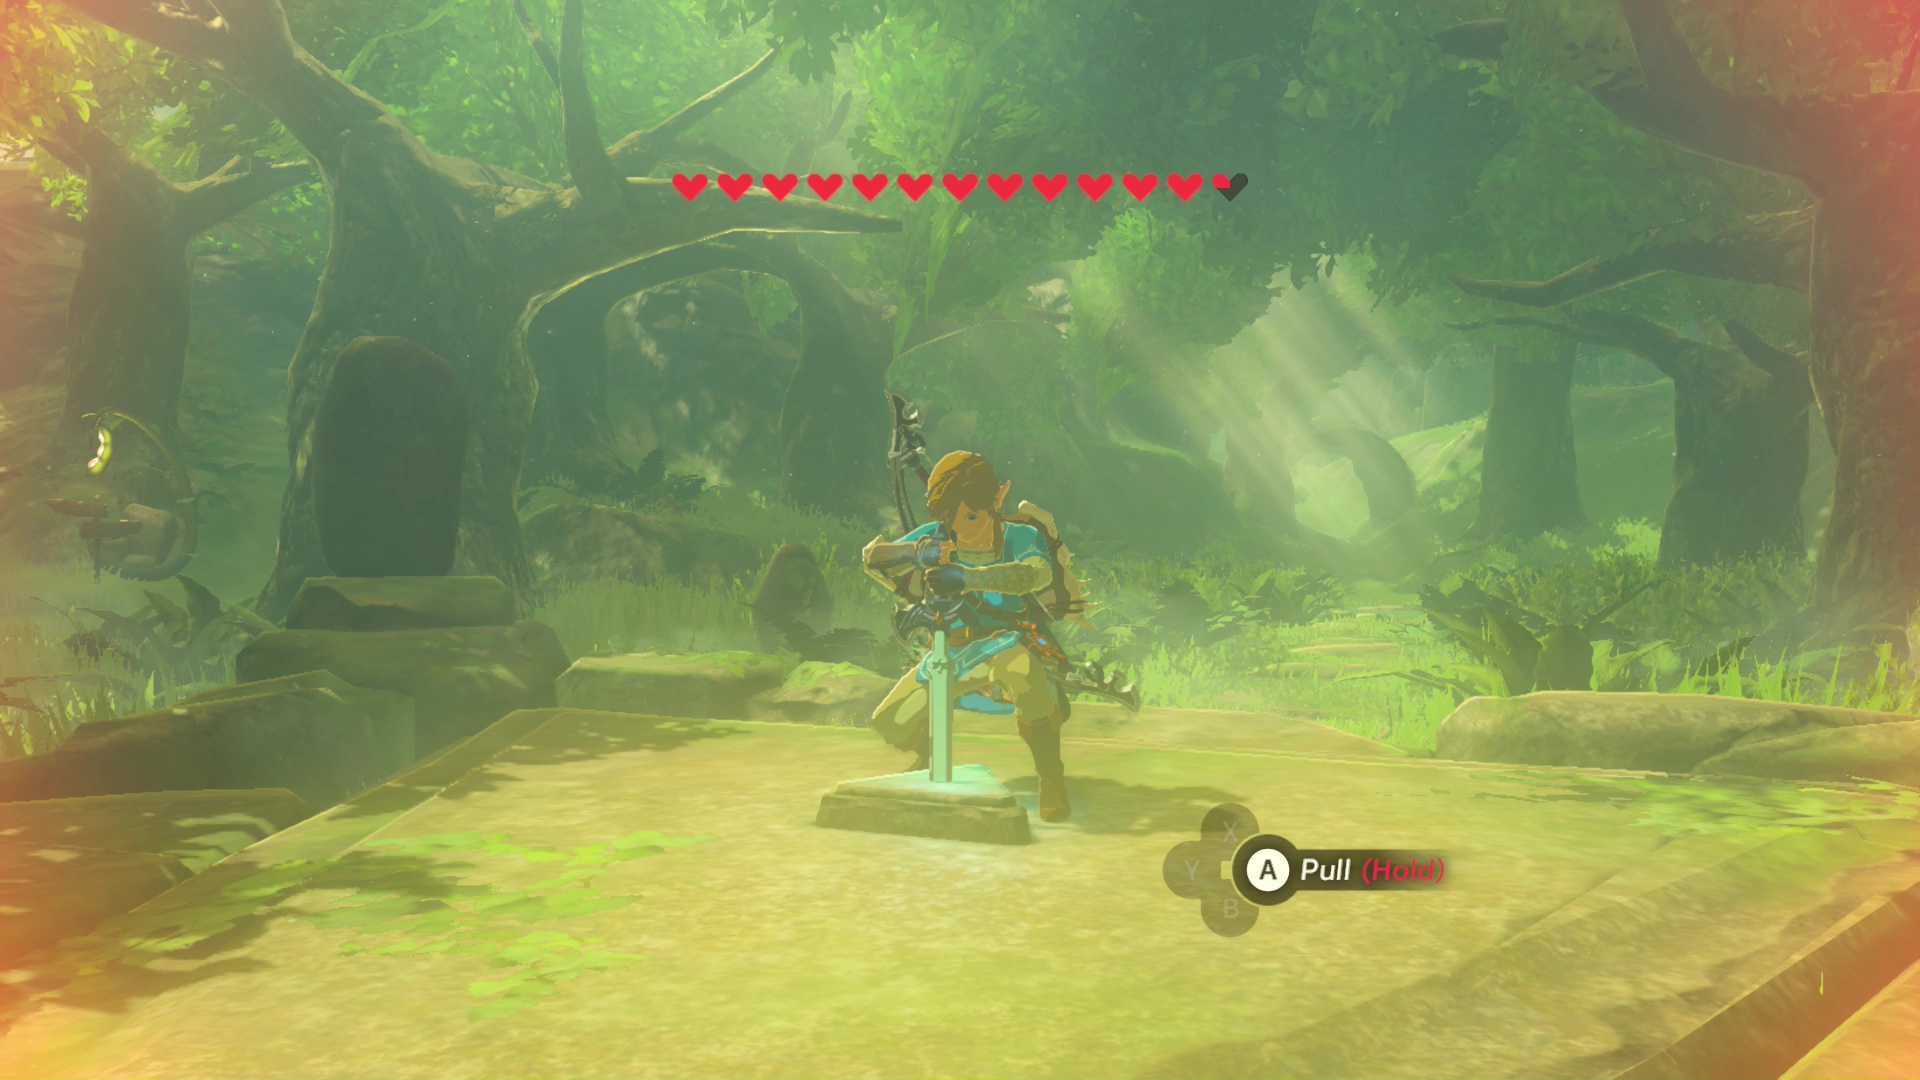 Legend Of Zelda: Breath Of The Wild - How To Find The Master Sword